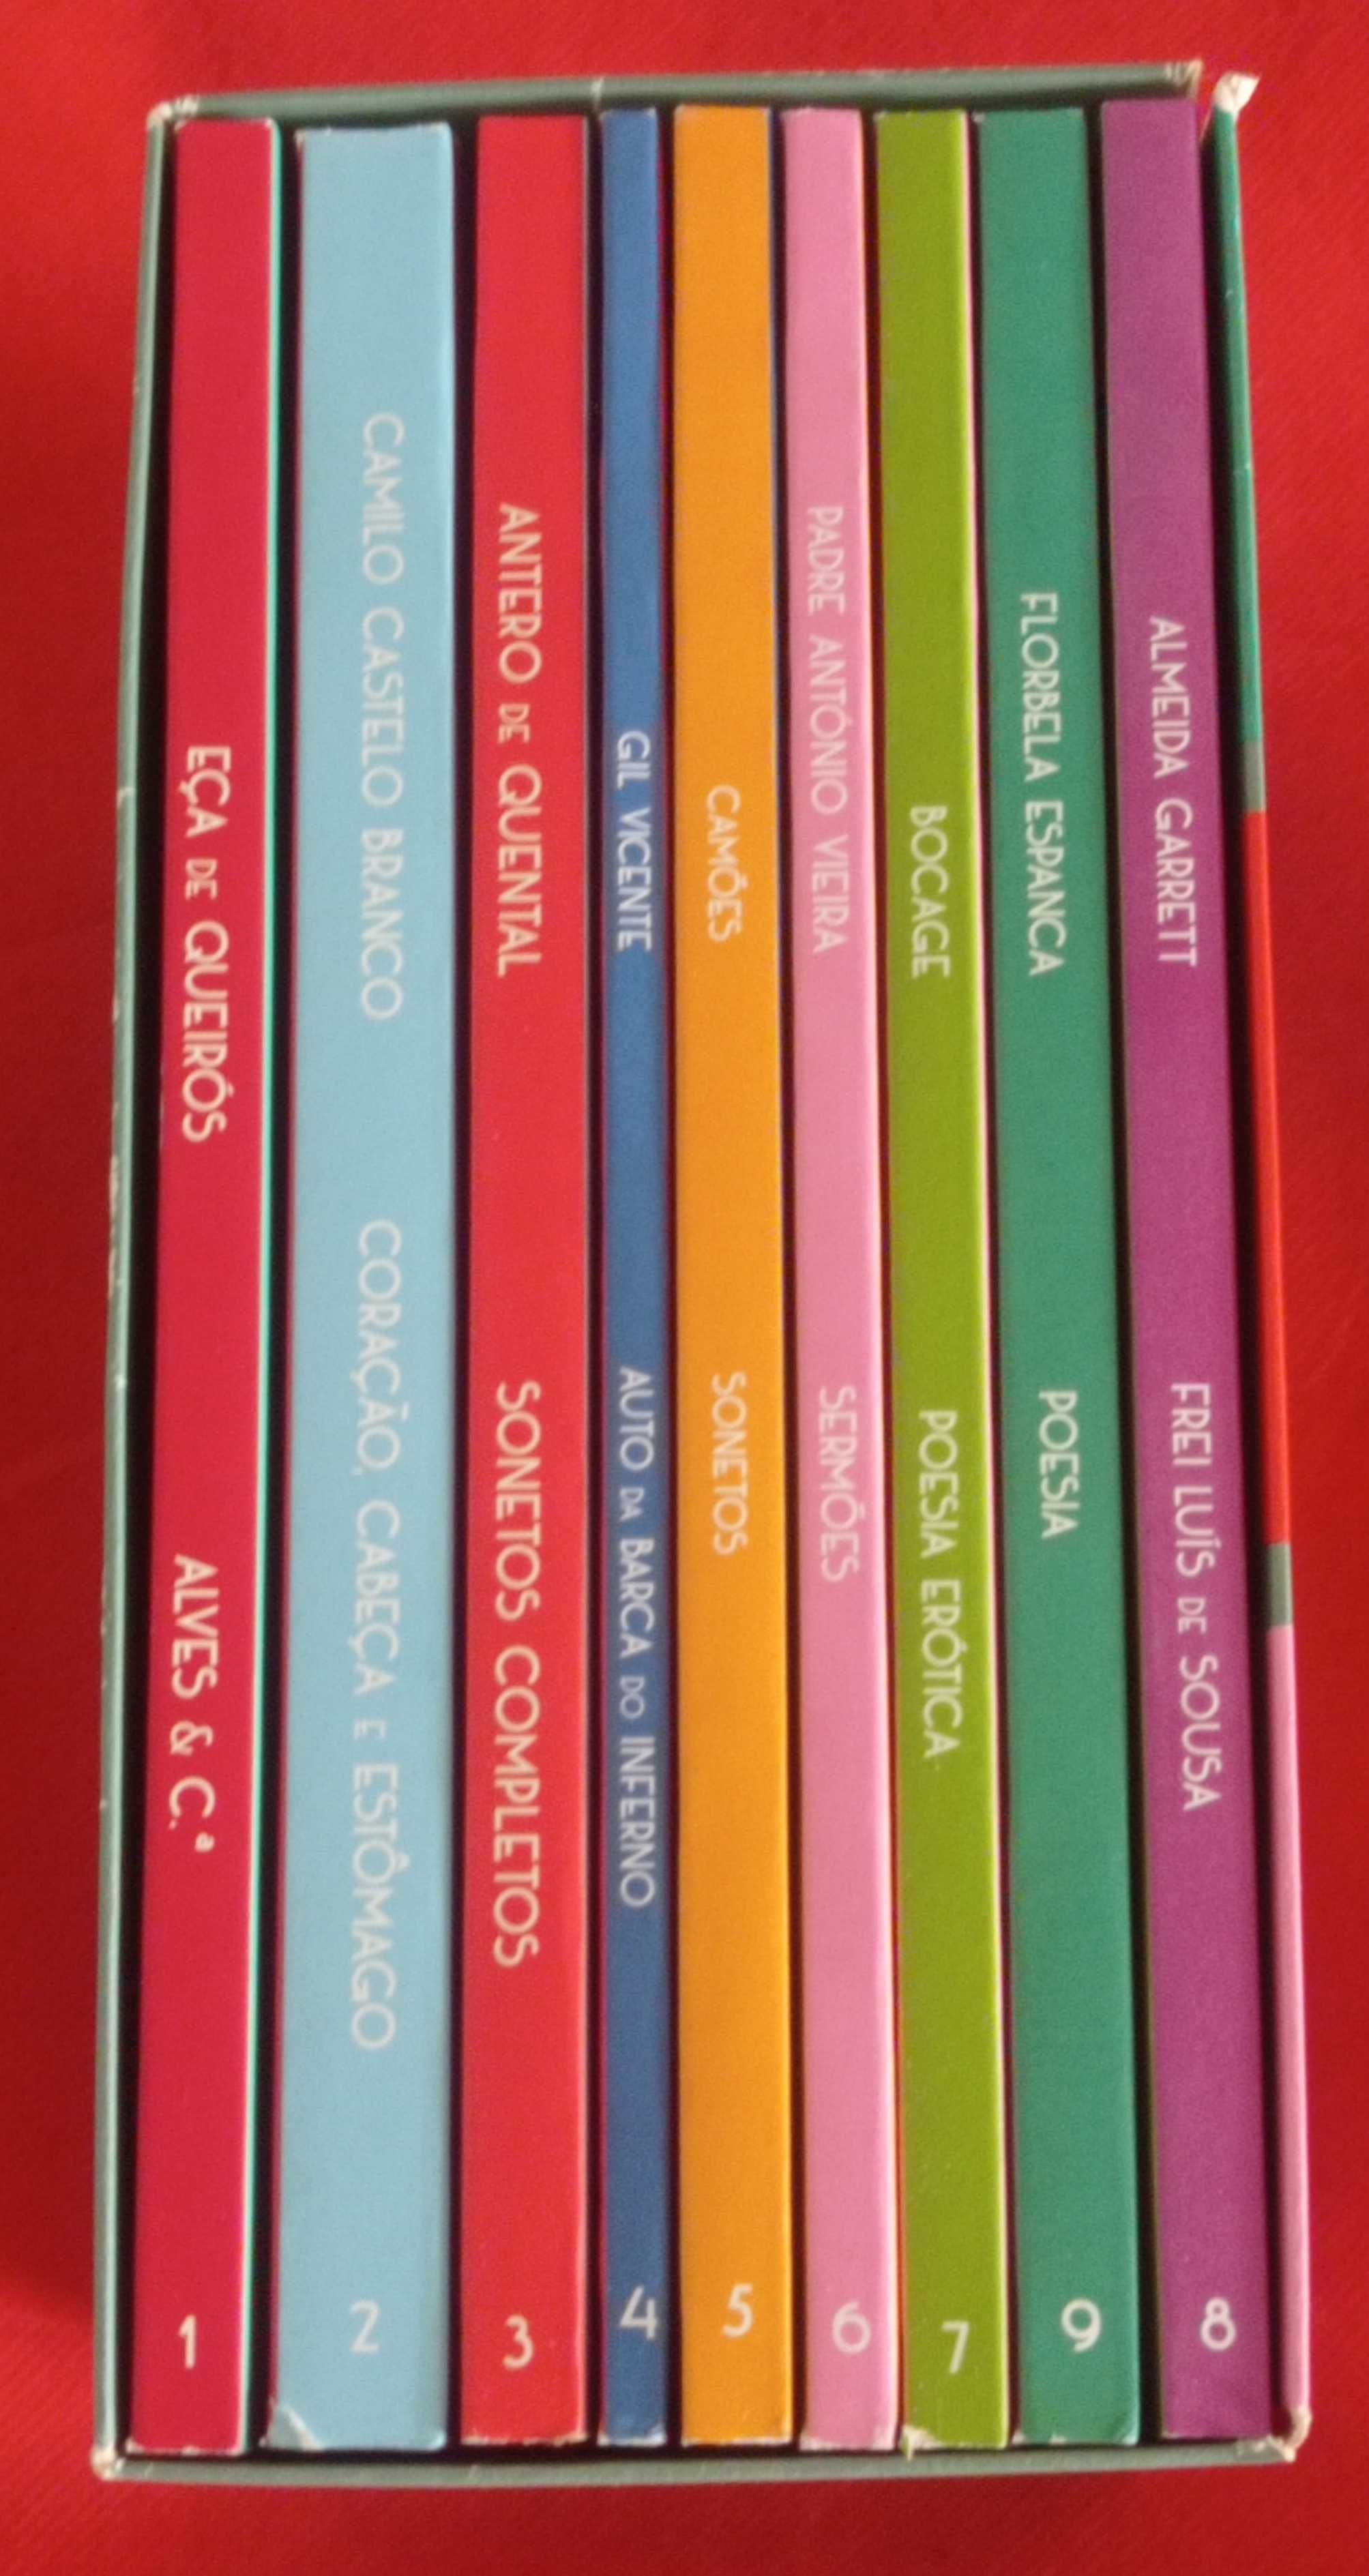 Coletânea completa Literatura (volumes).